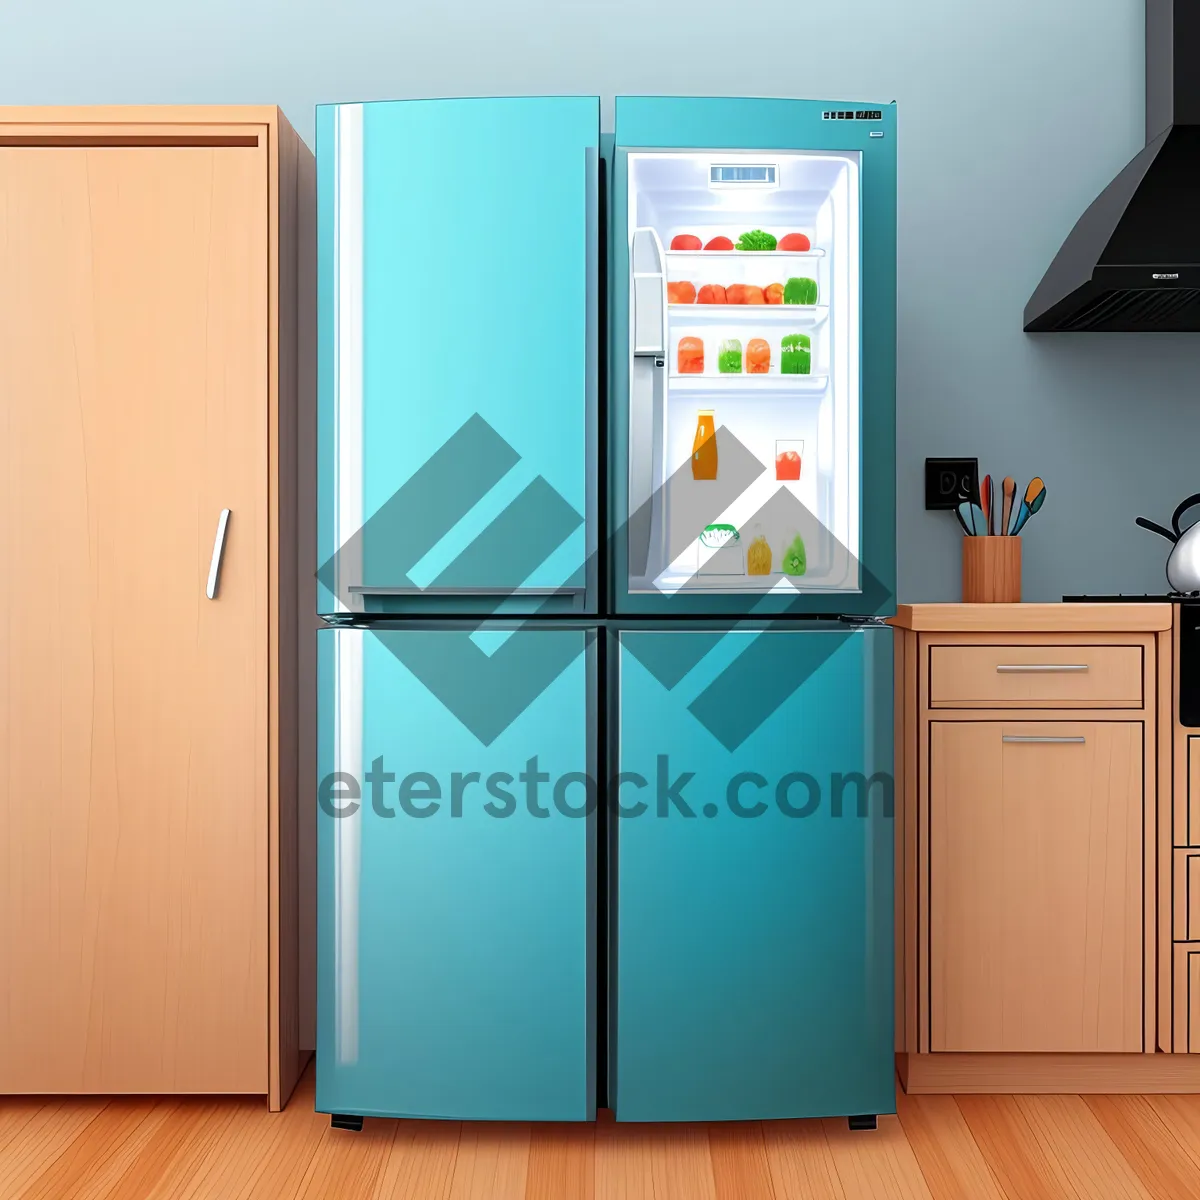 Picture of Modern White Refrigerator in Open Office Interior Design